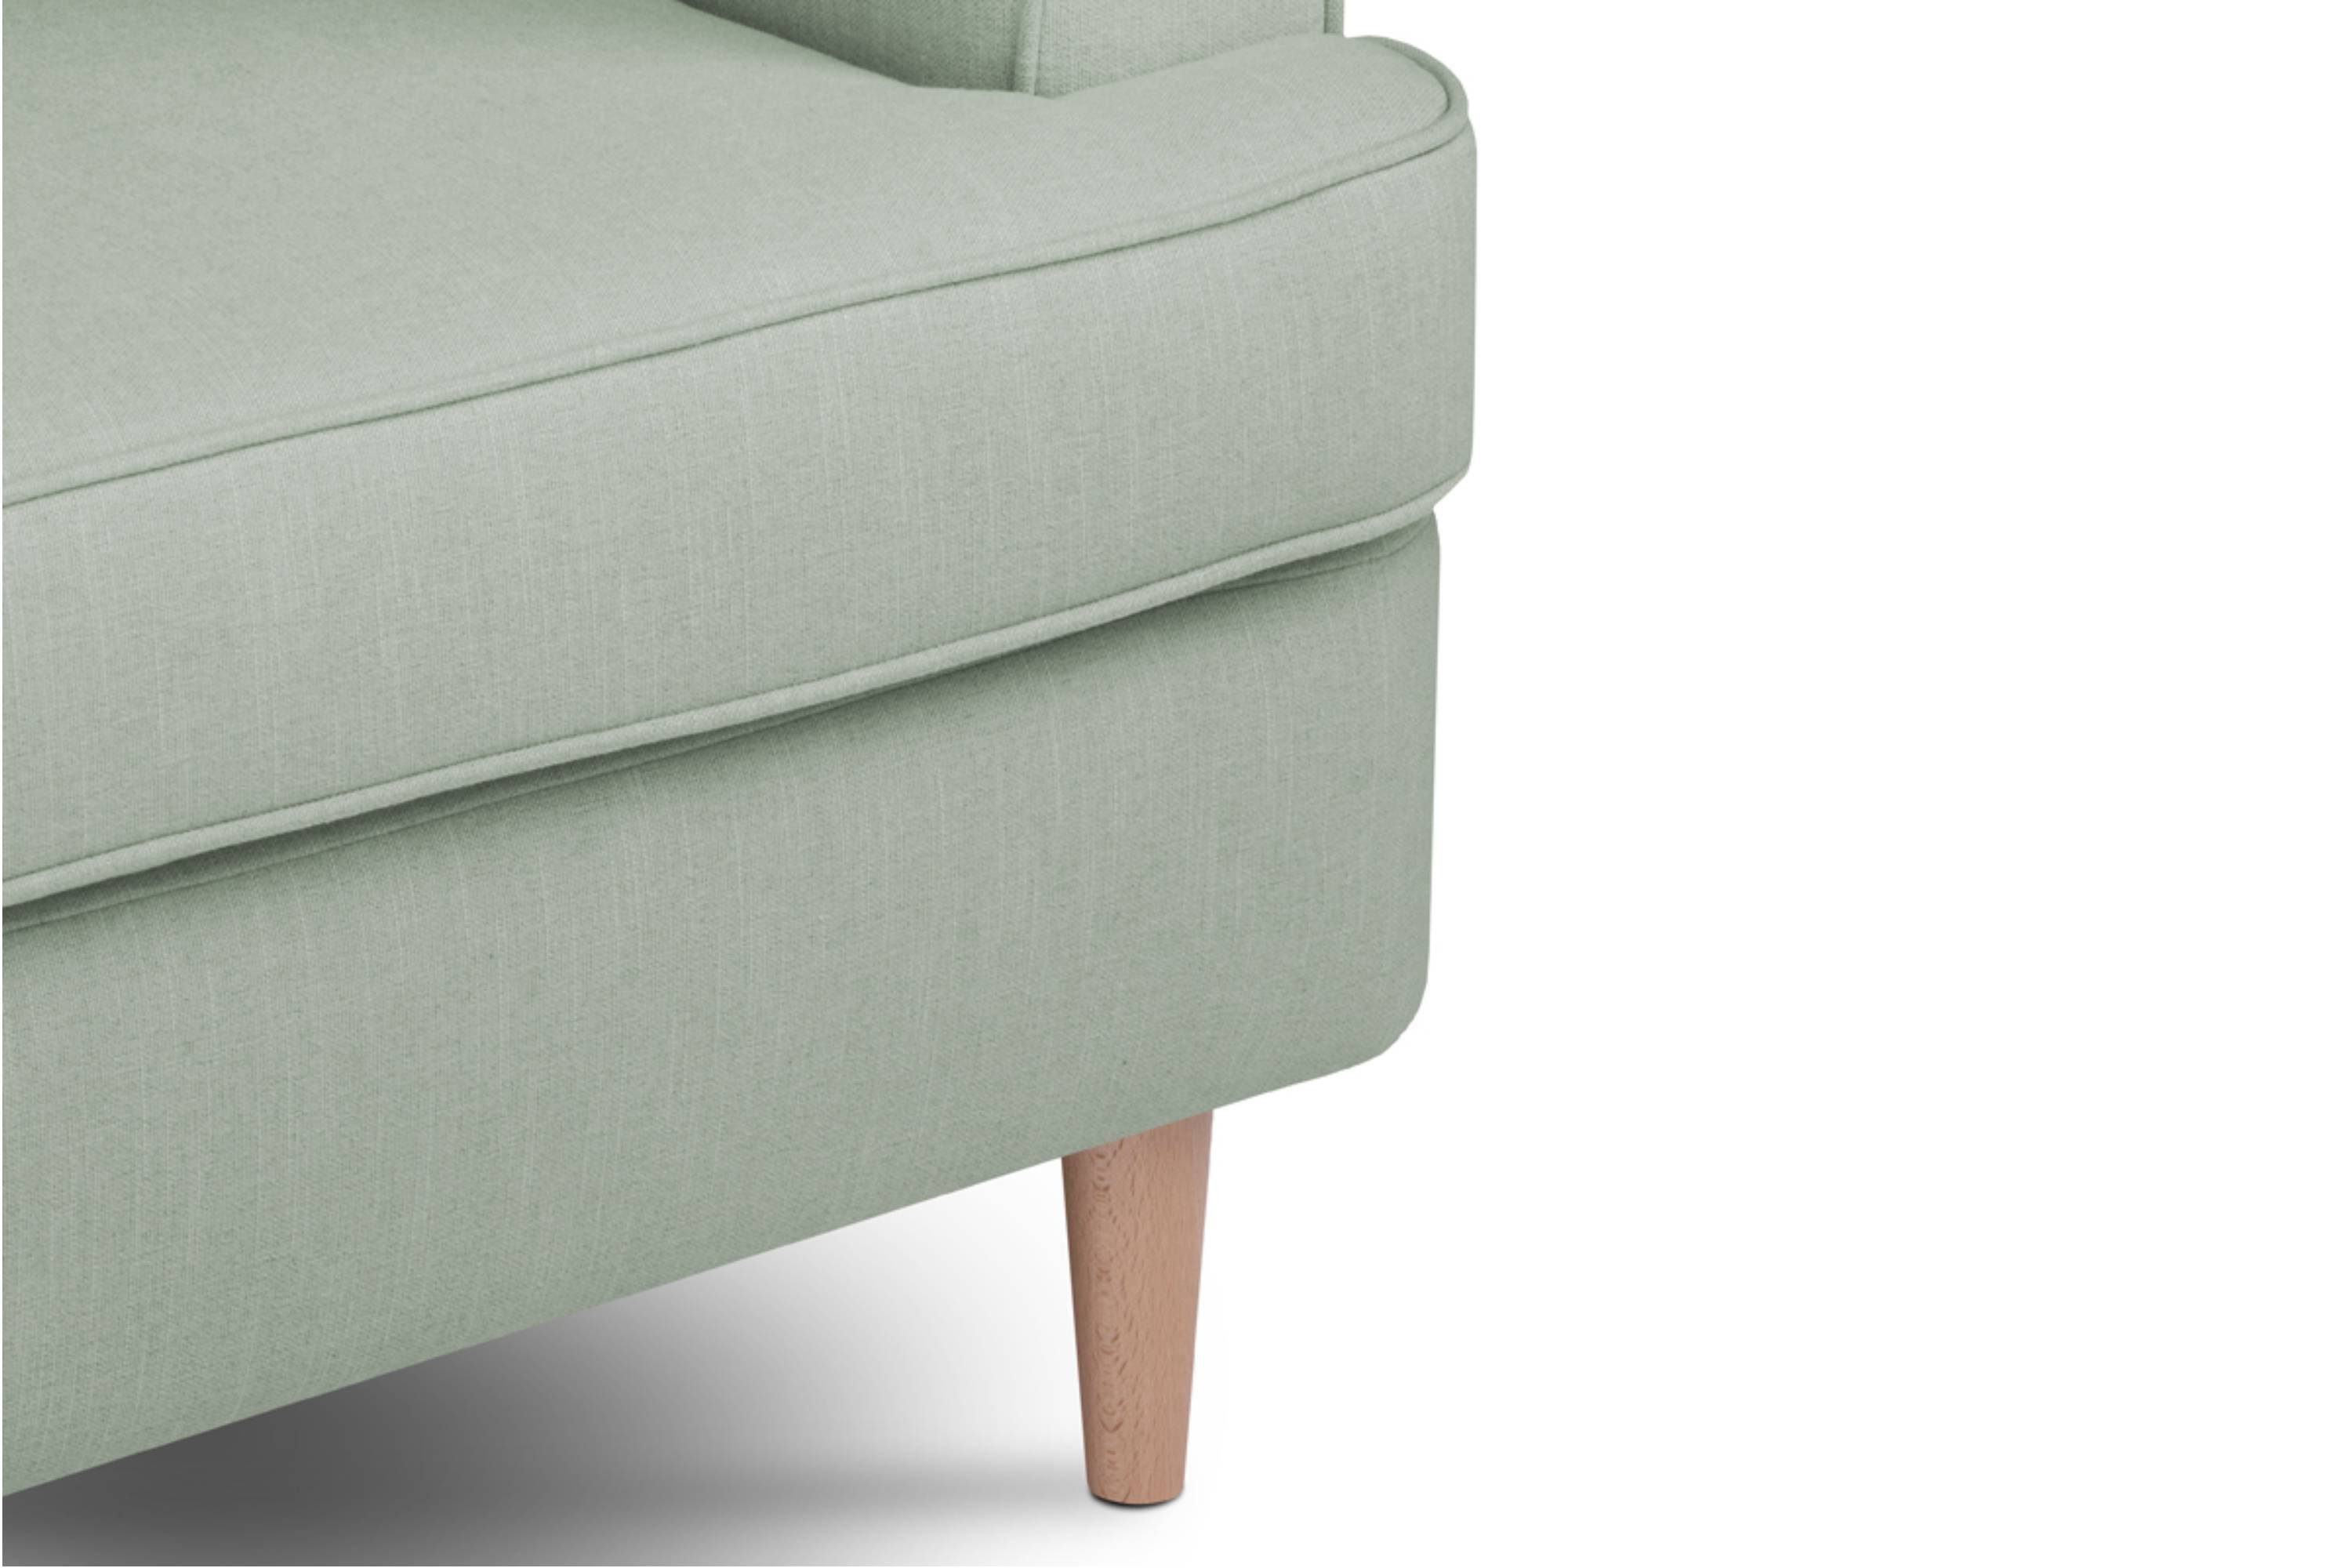 Kissen dekorativem Konsimo inklusive STRALIS Design, hohe Füße, Ohrensessel zeitloses Sessel,